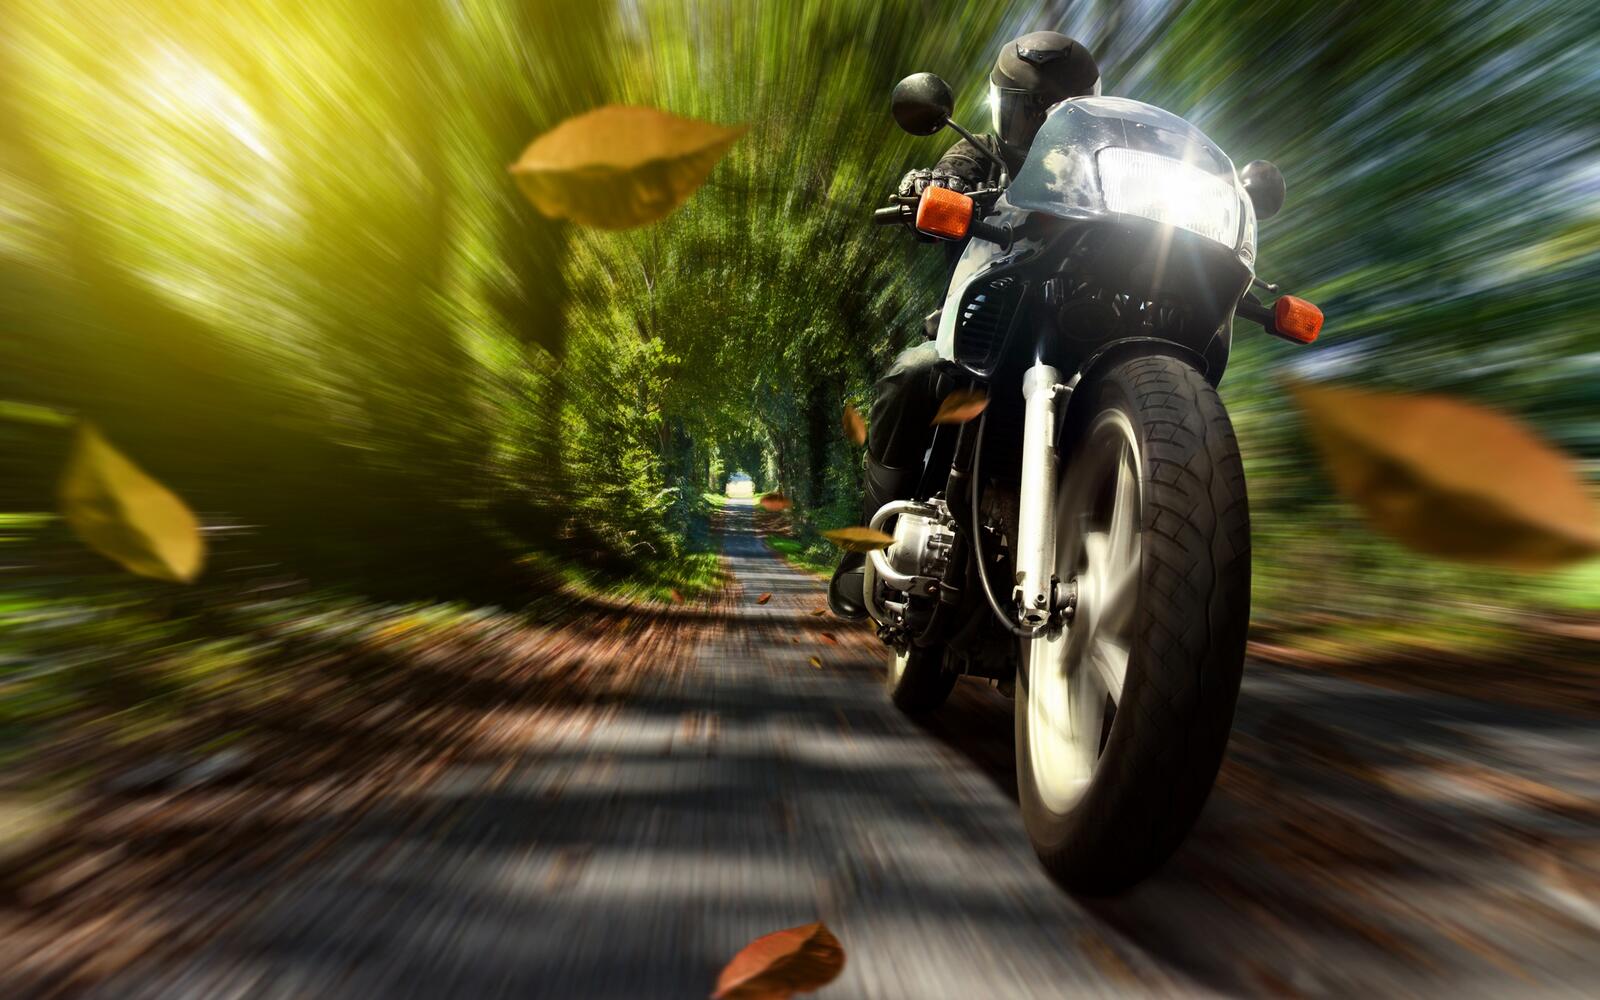 Wallpapers bike motorcyclist speed on the desktop